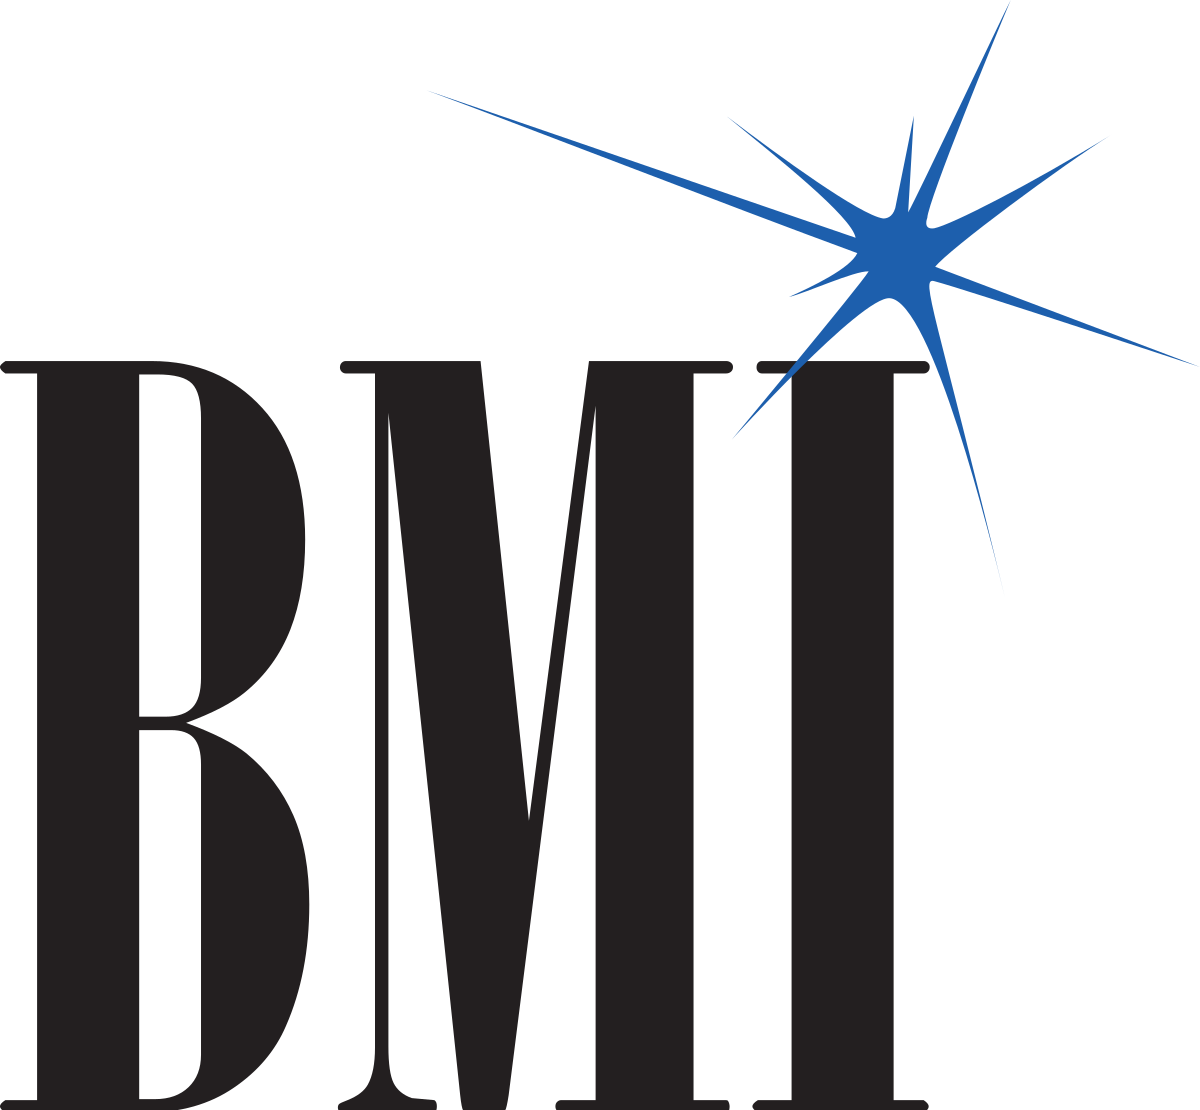 BMI logo.png